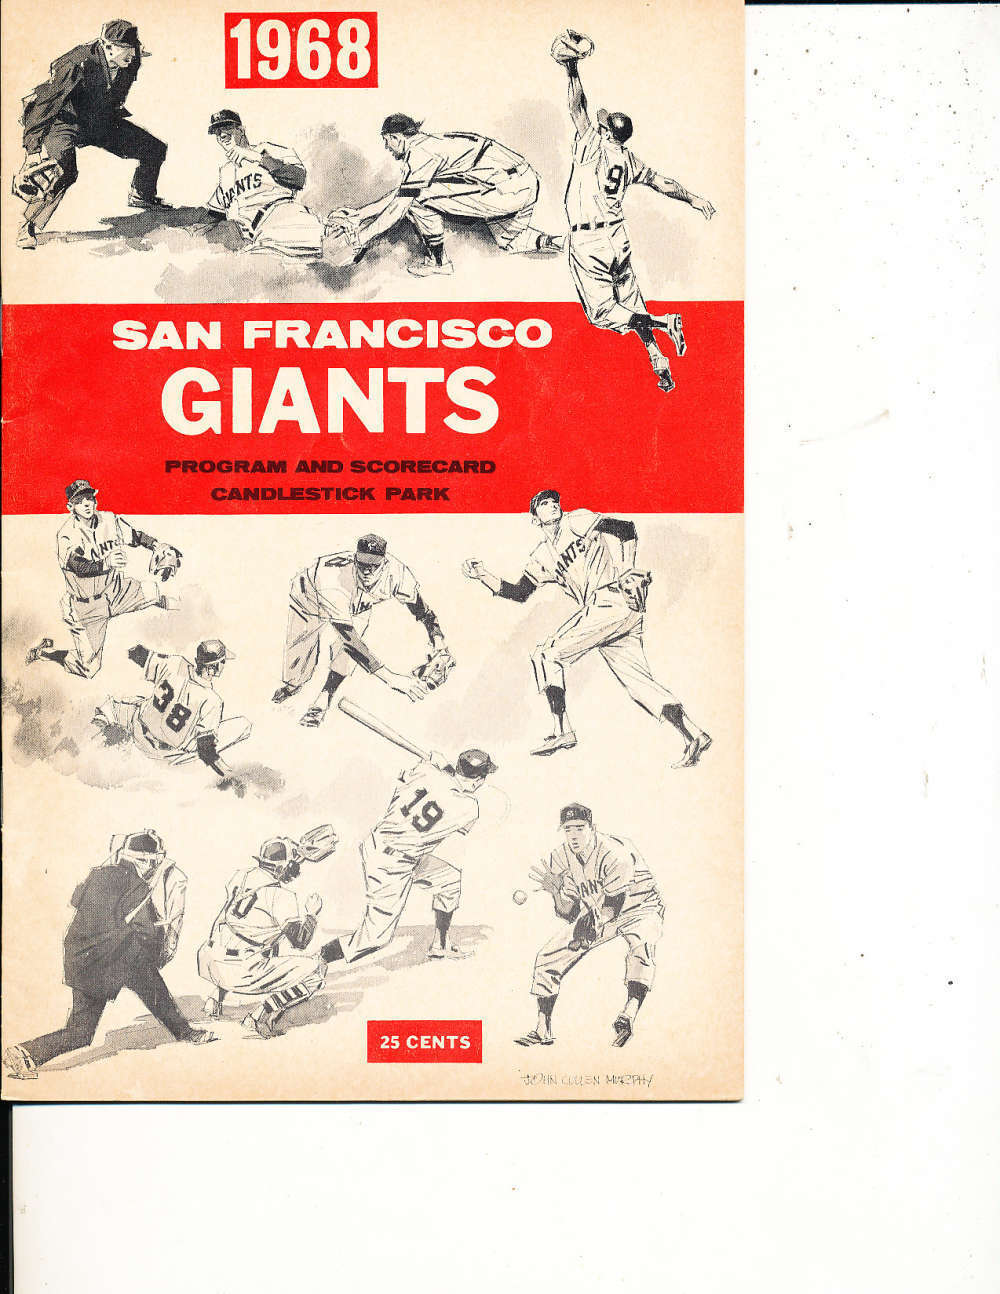 Aug 4 1968 San Francisco Giants vs pittsburgh Pirates scored Program bxprog1